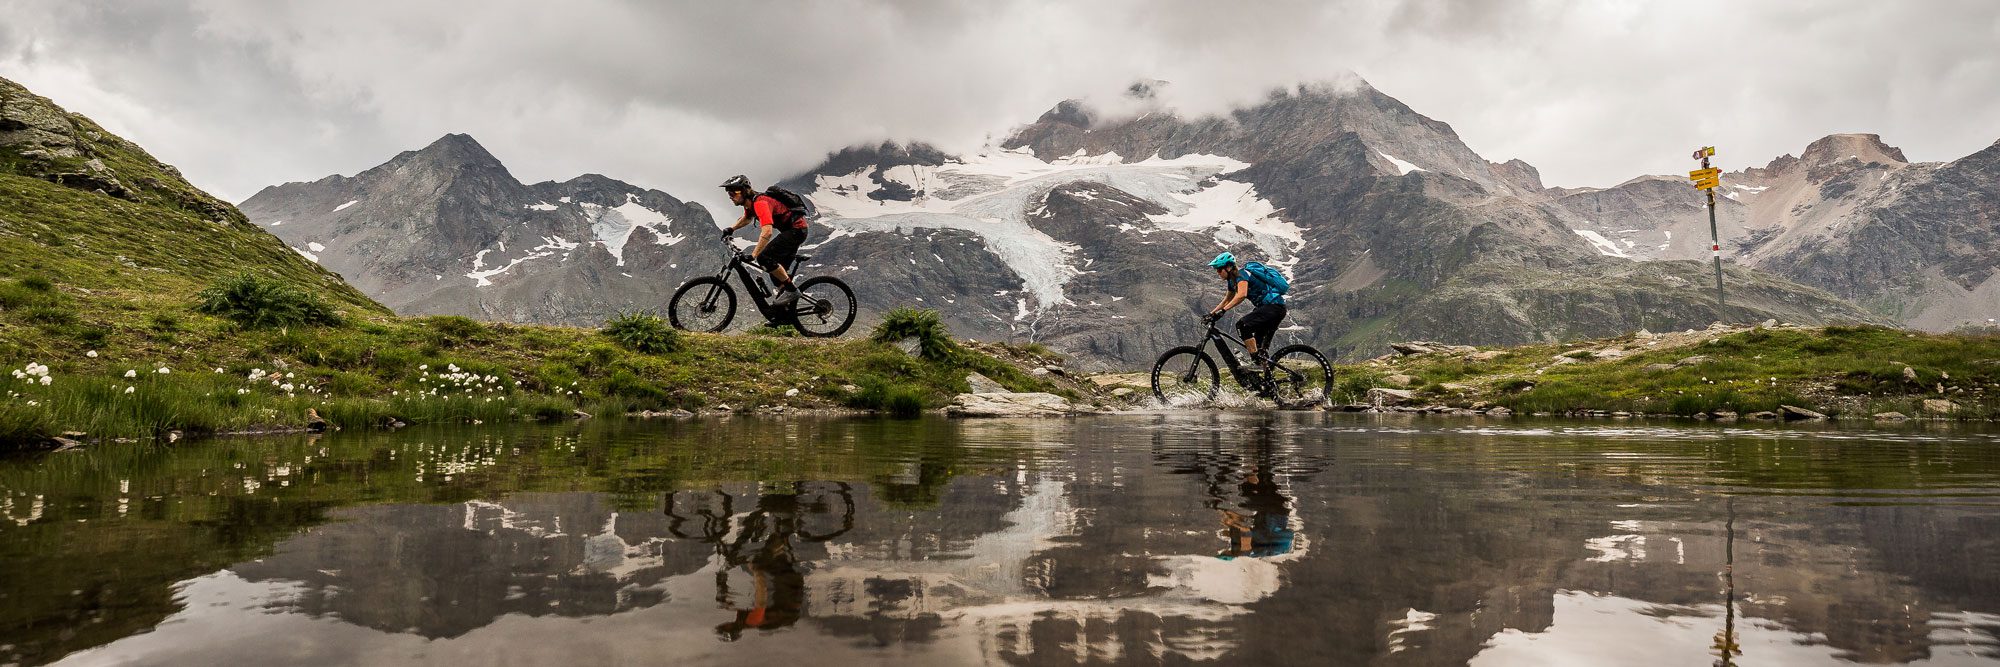 Mountain Bike Tours - E-MTB tours in Switzerland